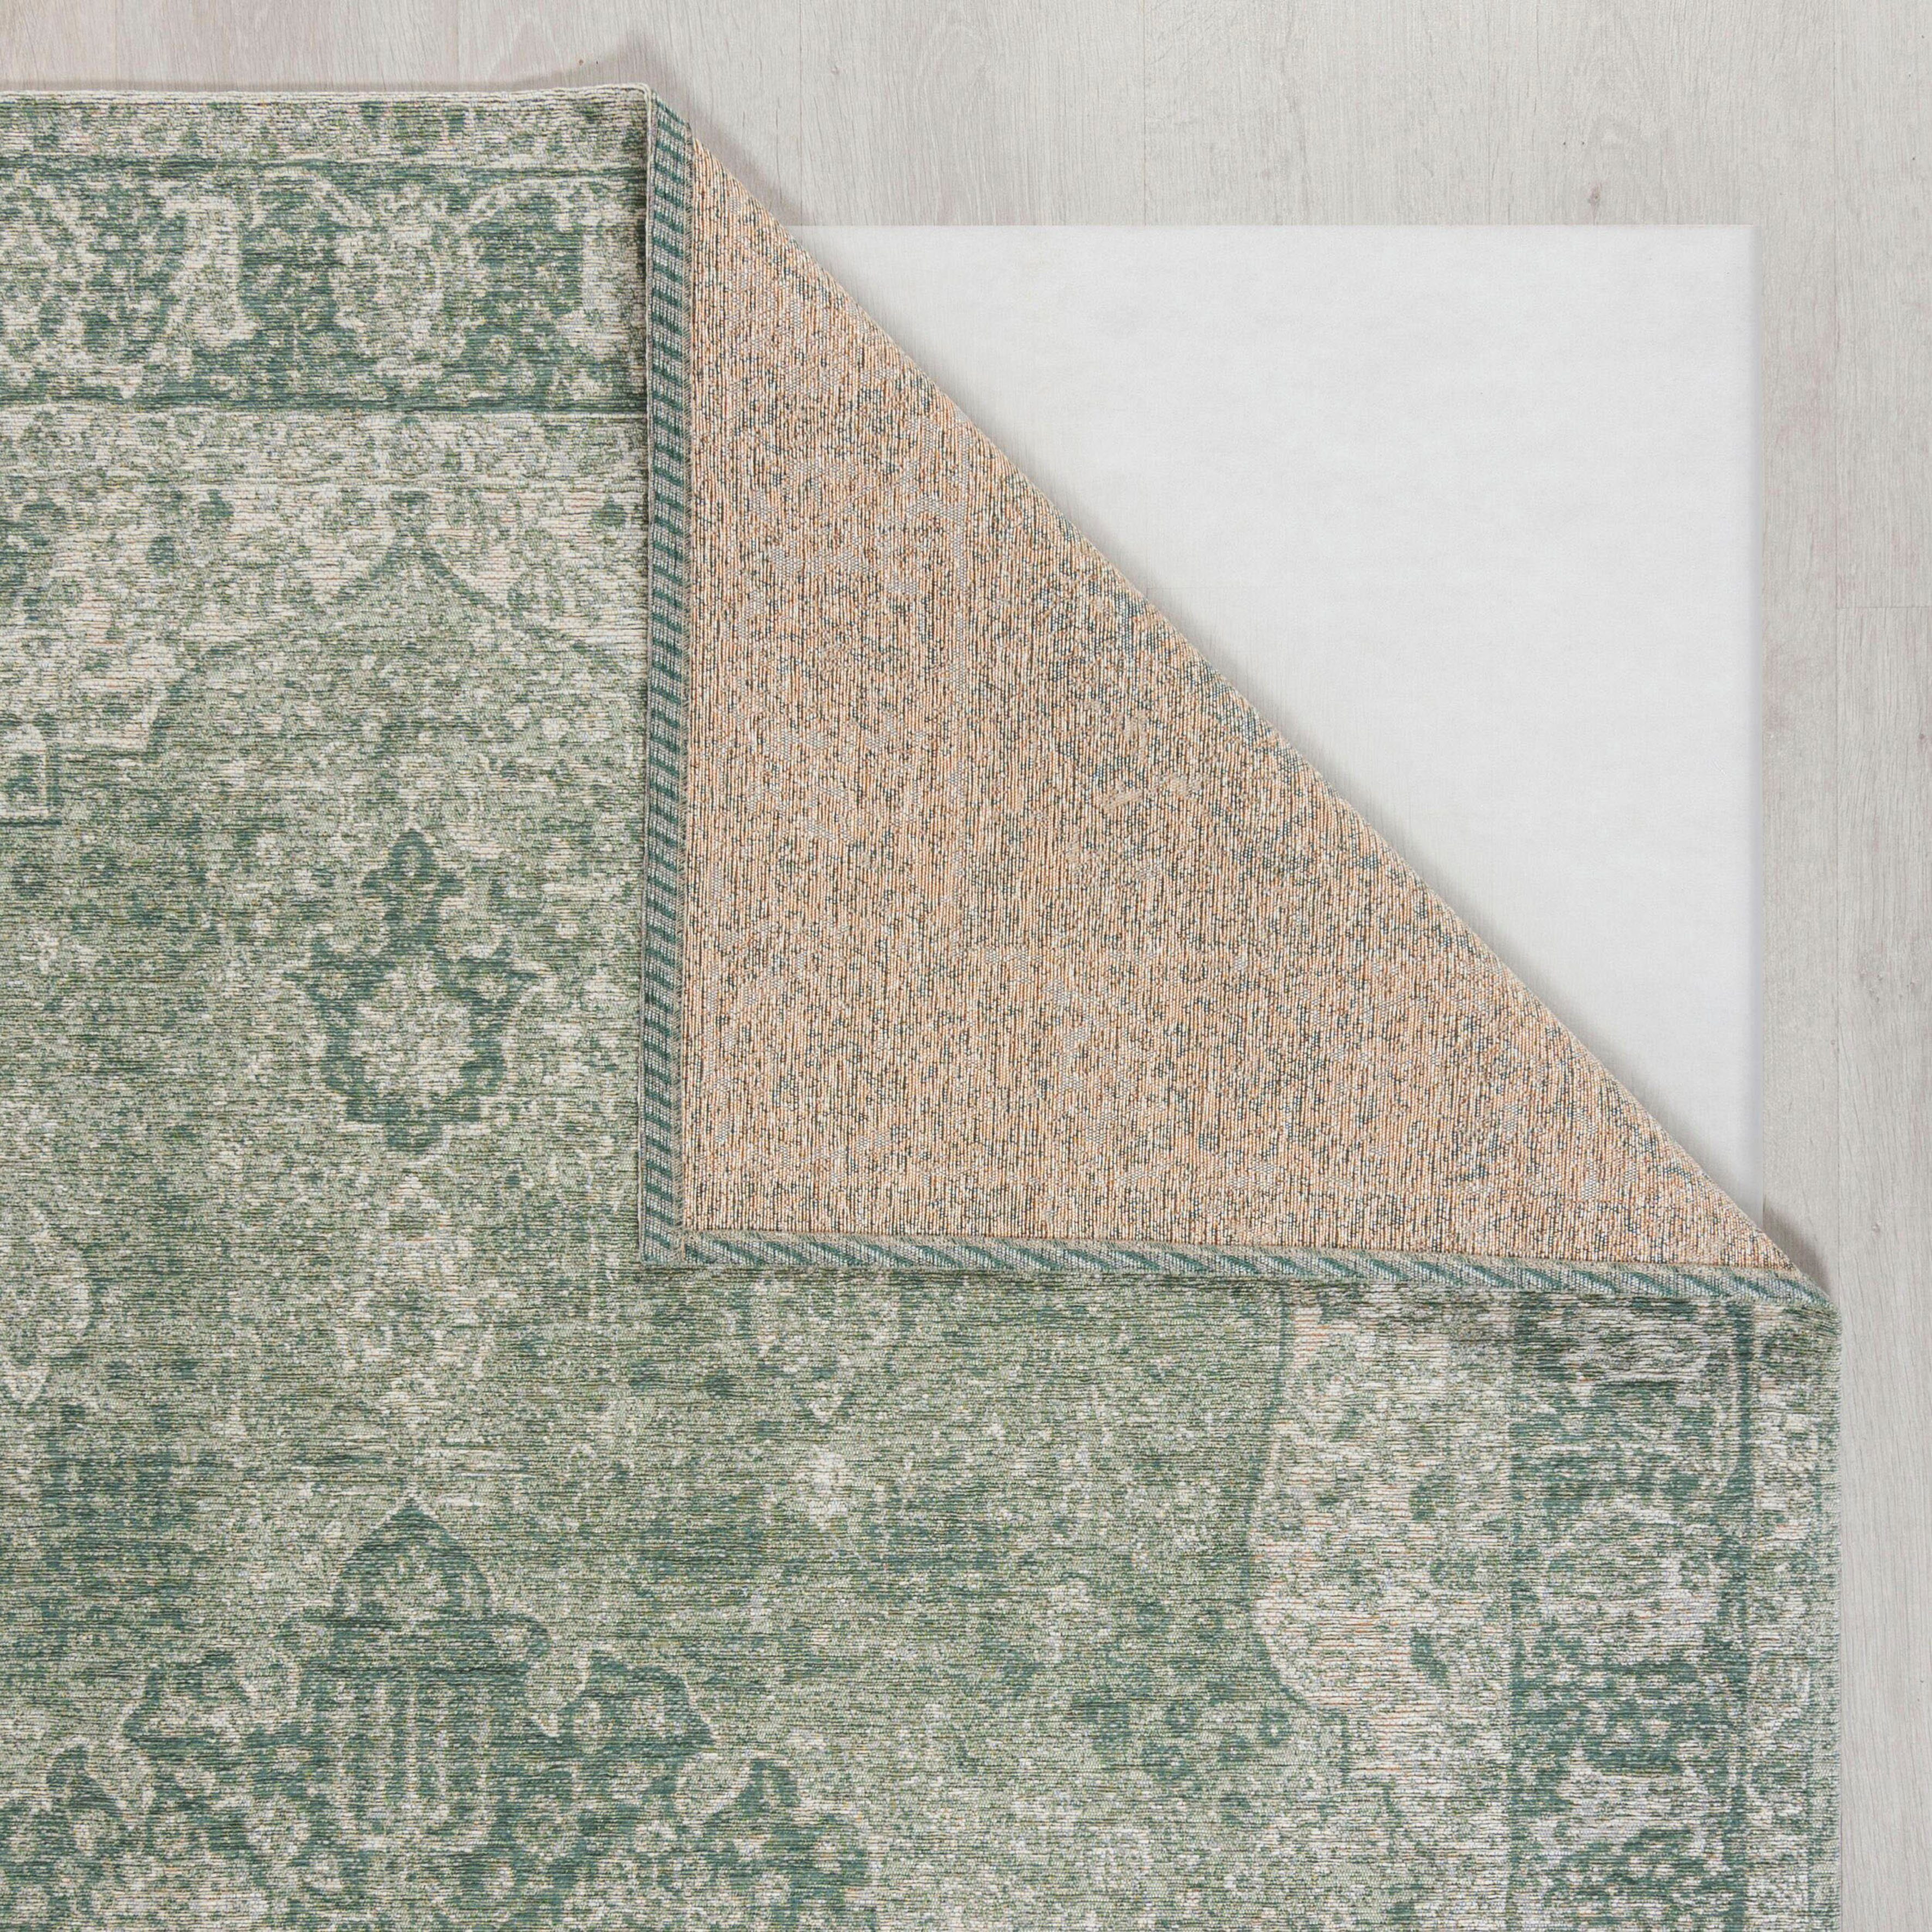 Höhe: mm, RUGS, Teppich FLAIR grün Antique, rechteckig, Vintage-Muster 4